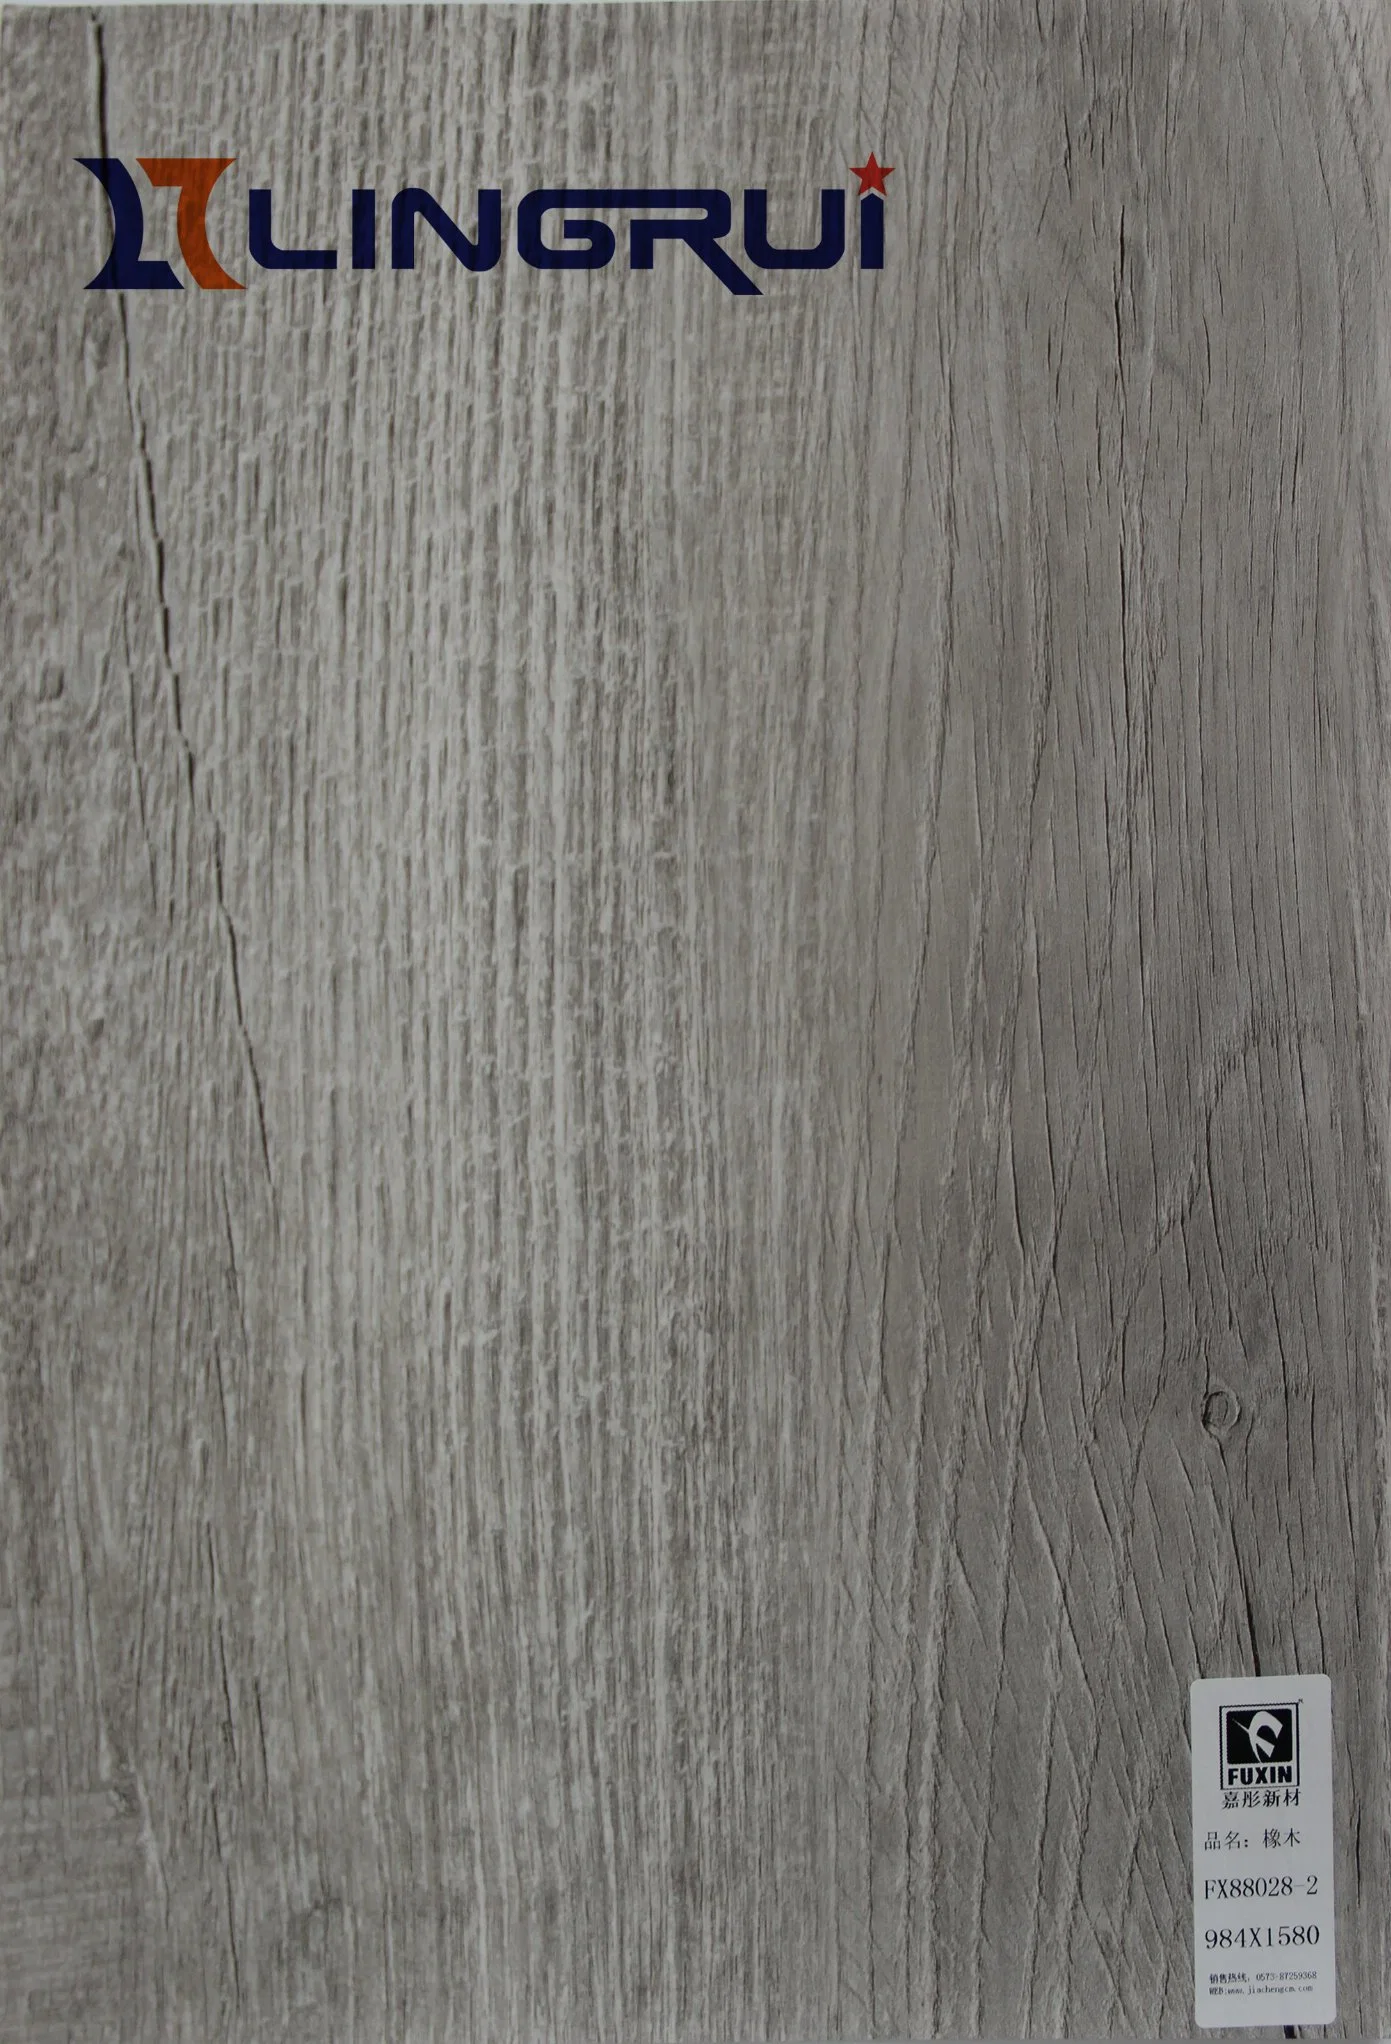 PVC Click Flooring Plank (marble look PVC floor) , Vinyl Flooring Tile, Plastic Vinyl Flooring for Decoration